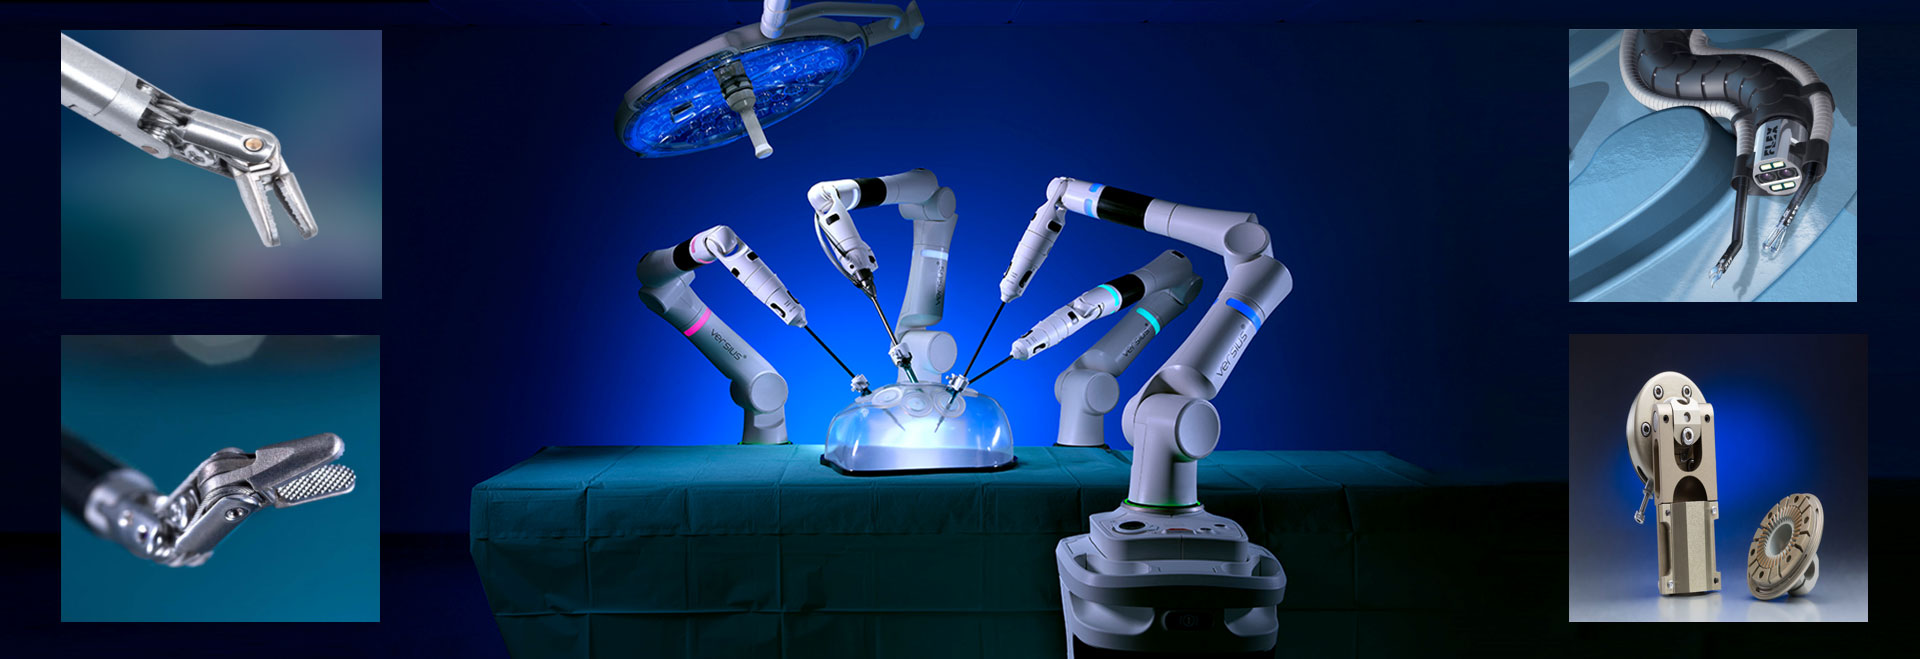 Medical Robots and Equipment